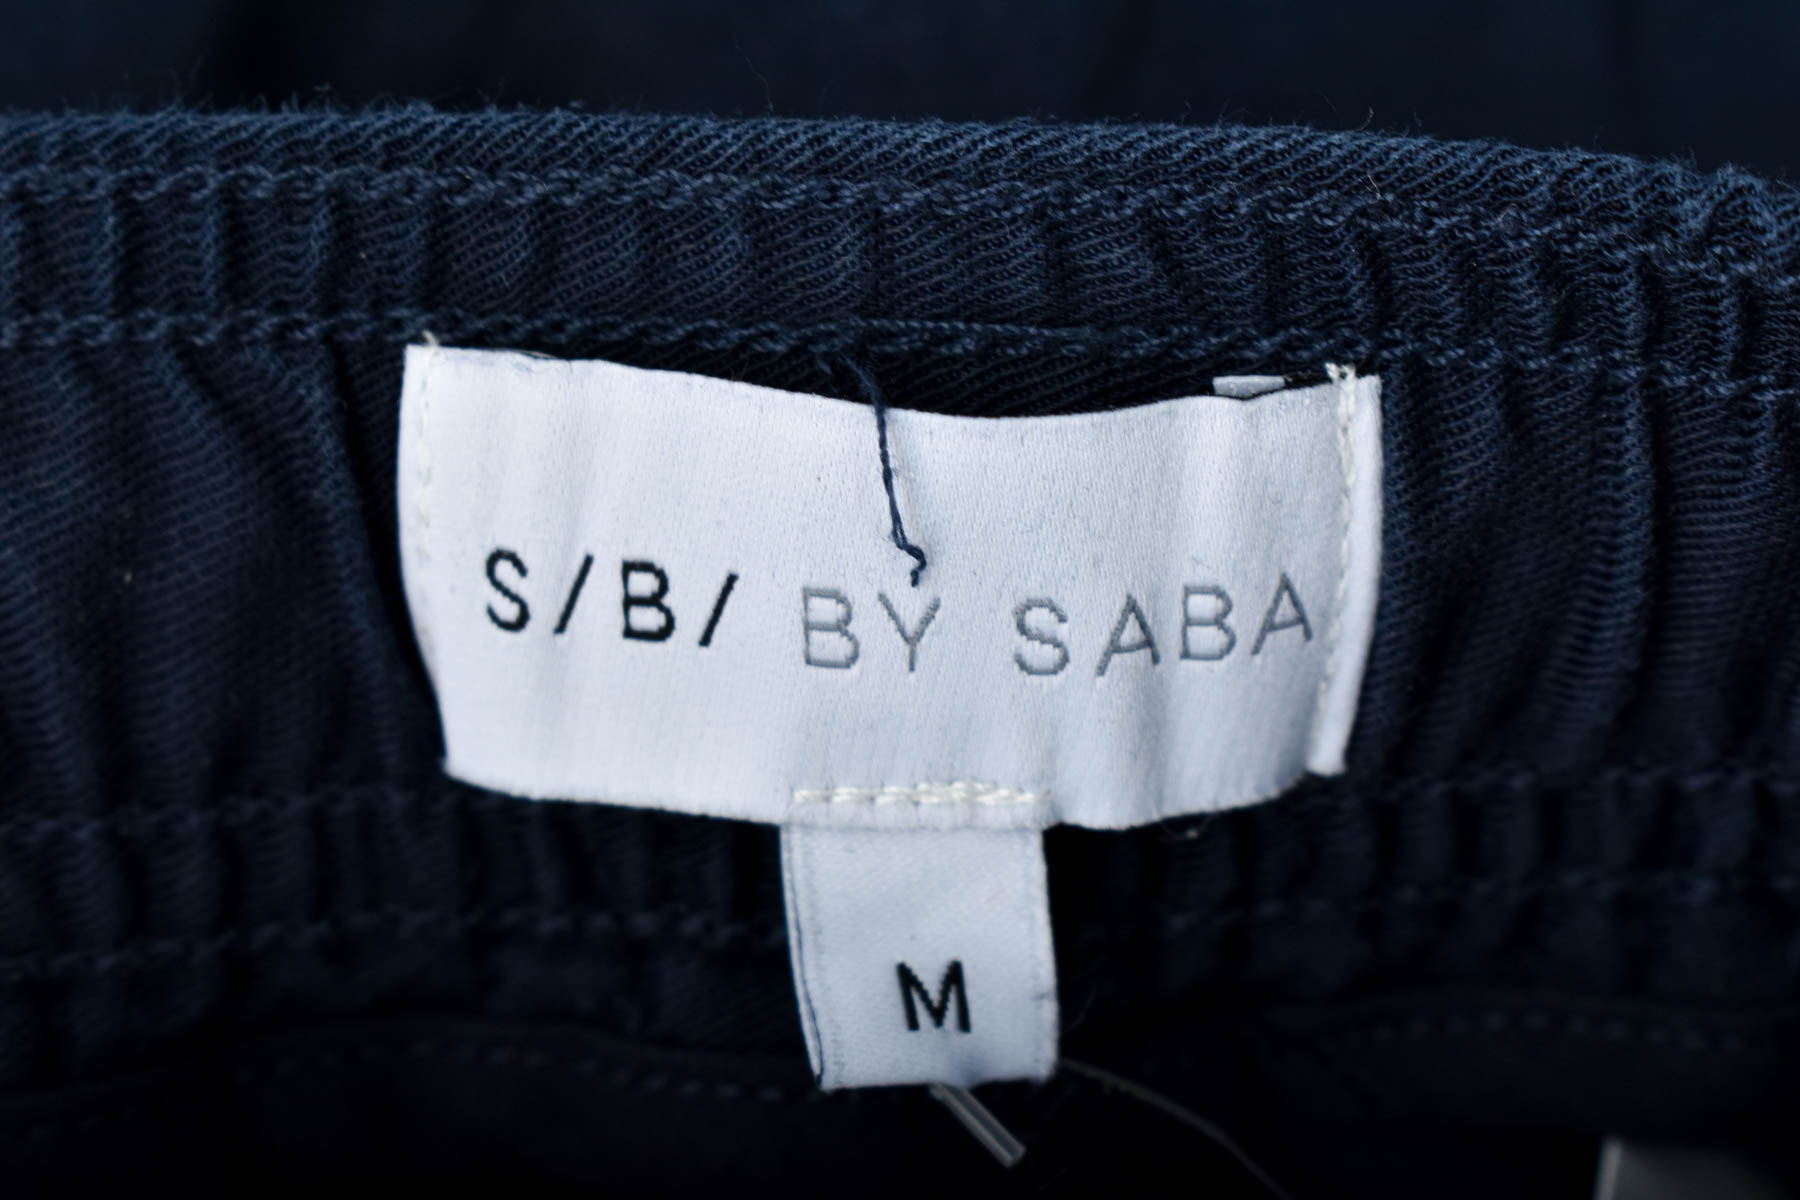 Men's trousers - S/B/ BY SABA - 2